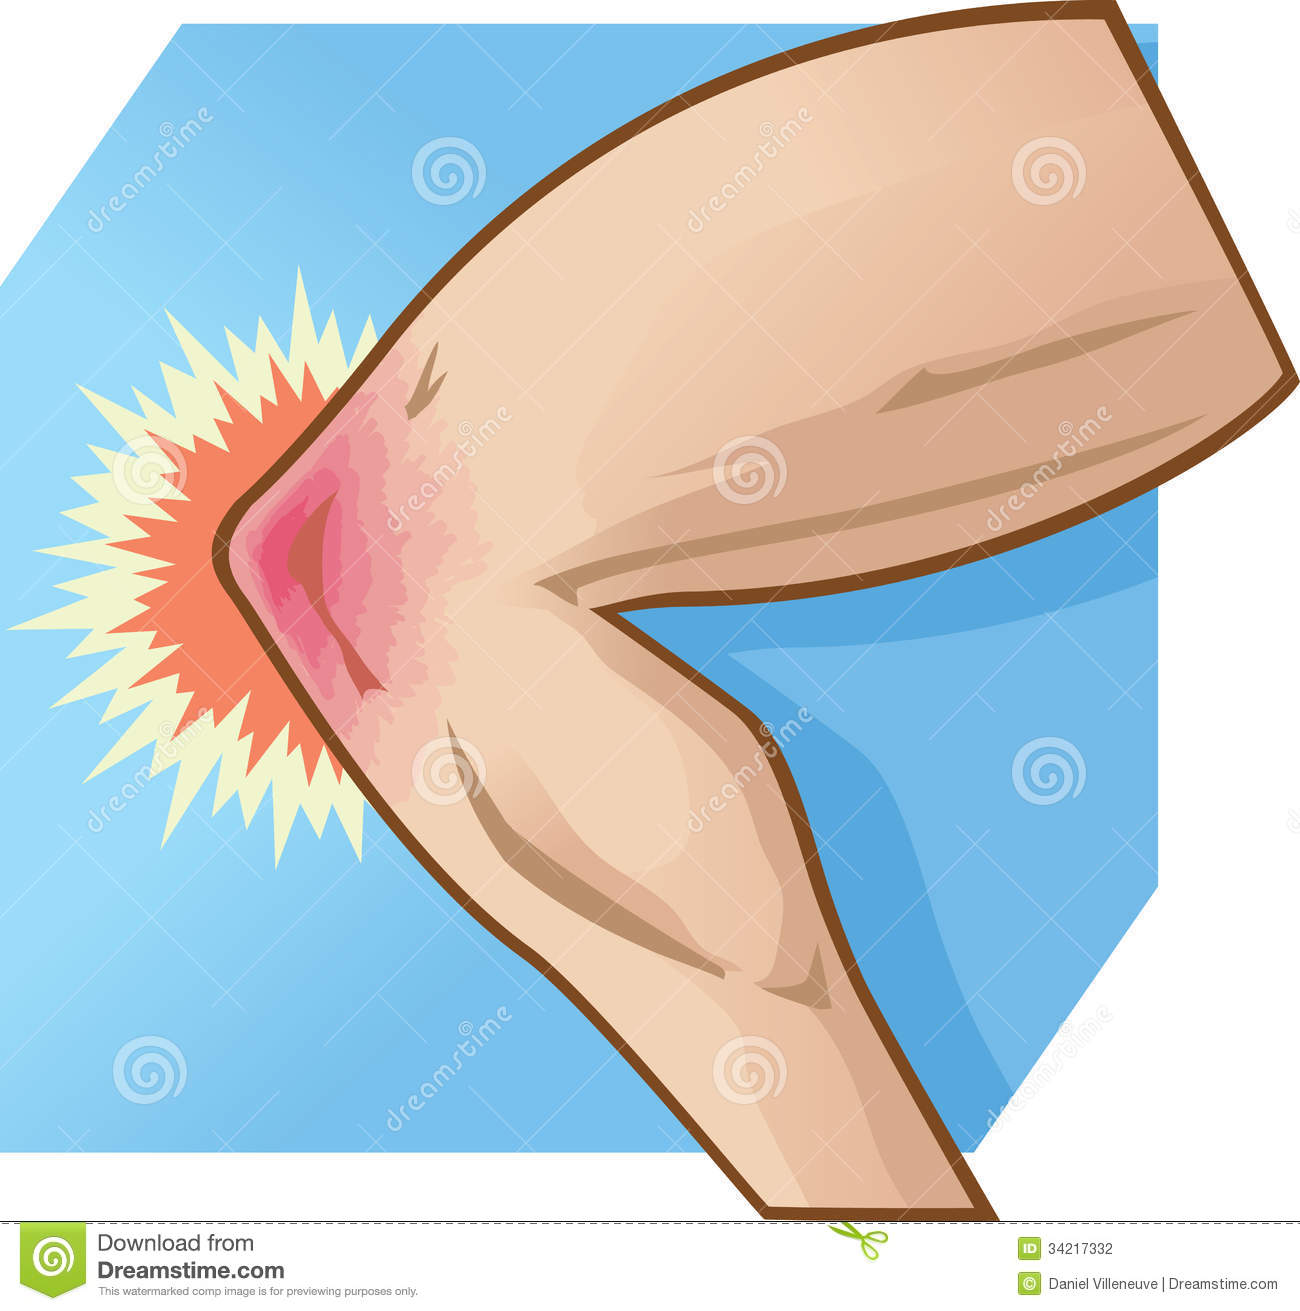 Knee Injury Clipart Knee Pain Illustration Stock Photography   Image